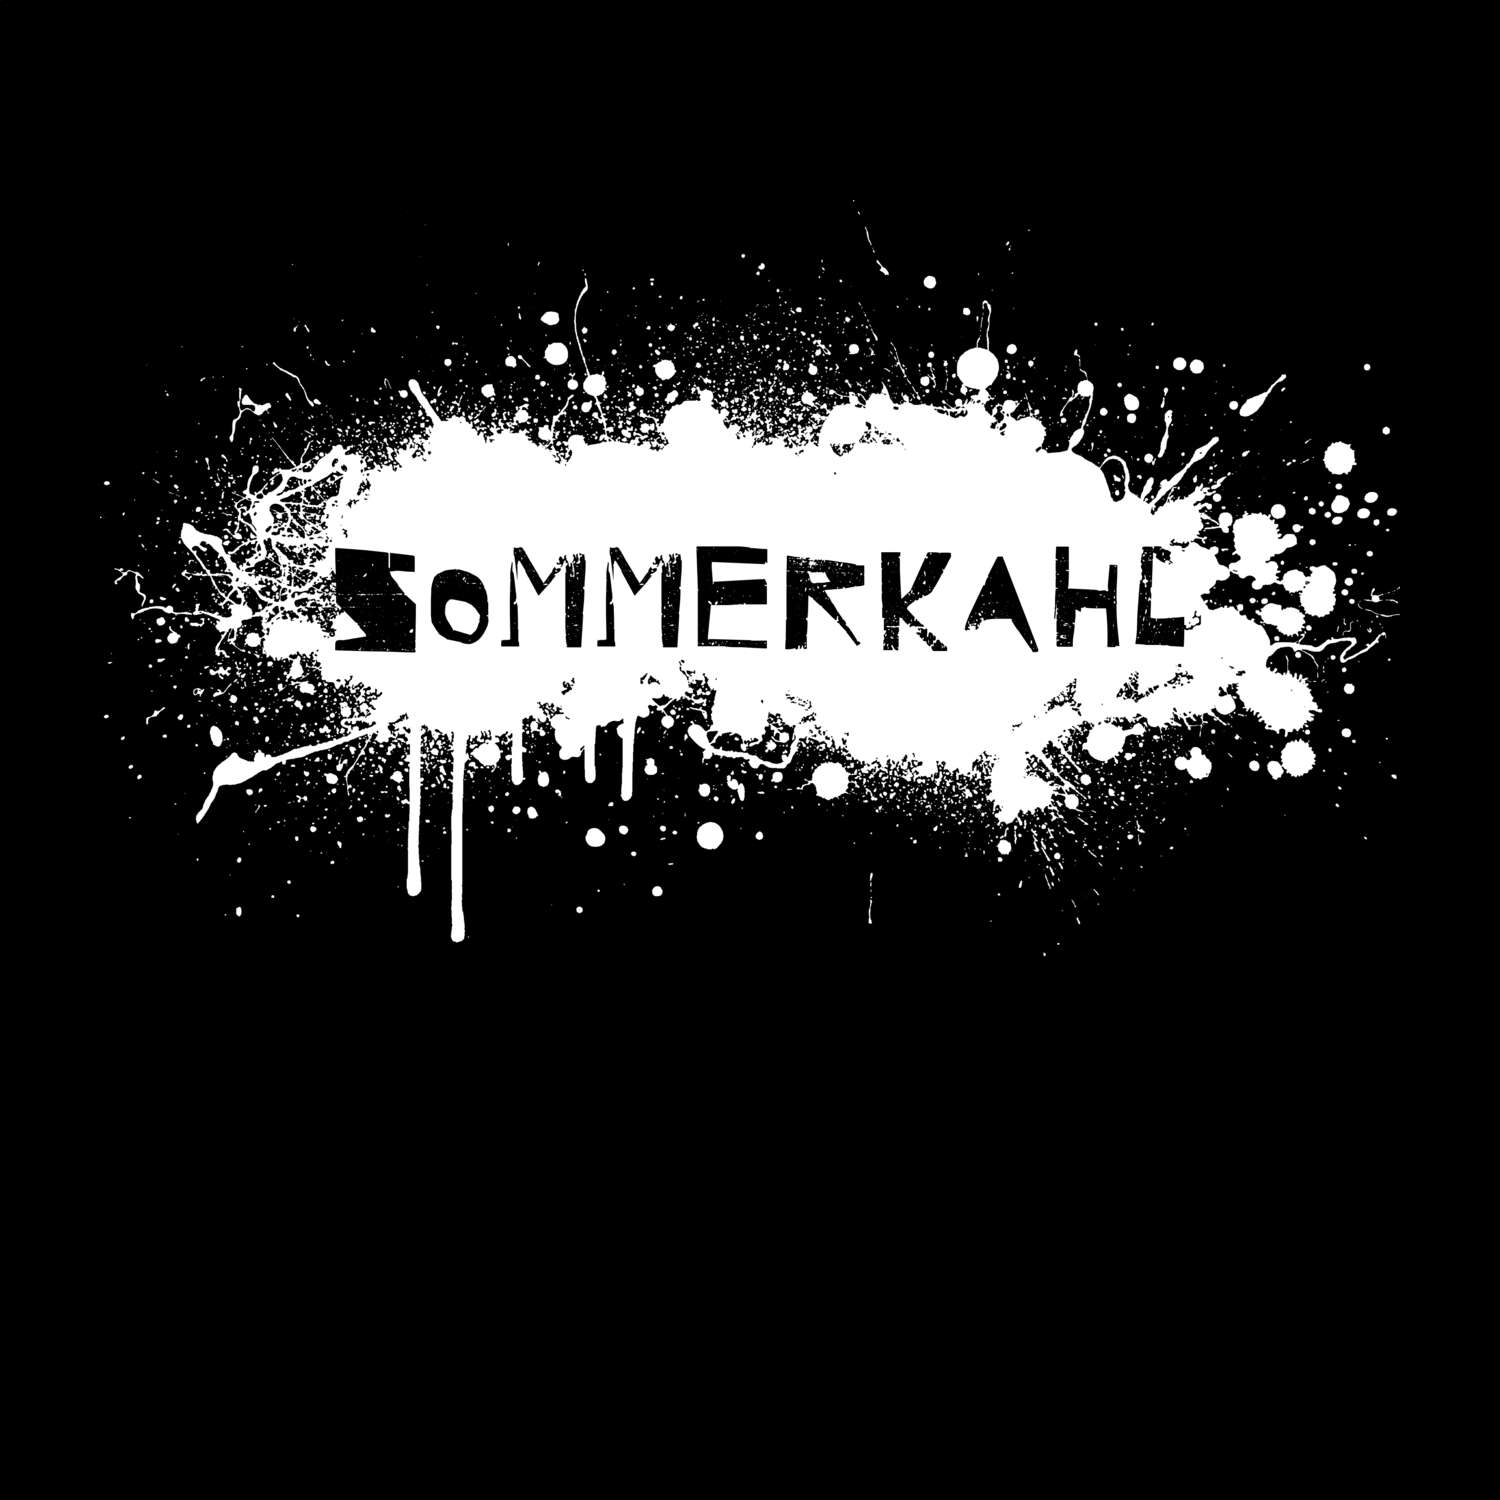 Sommerkahl T-Shirt »Paint Splash Punk«